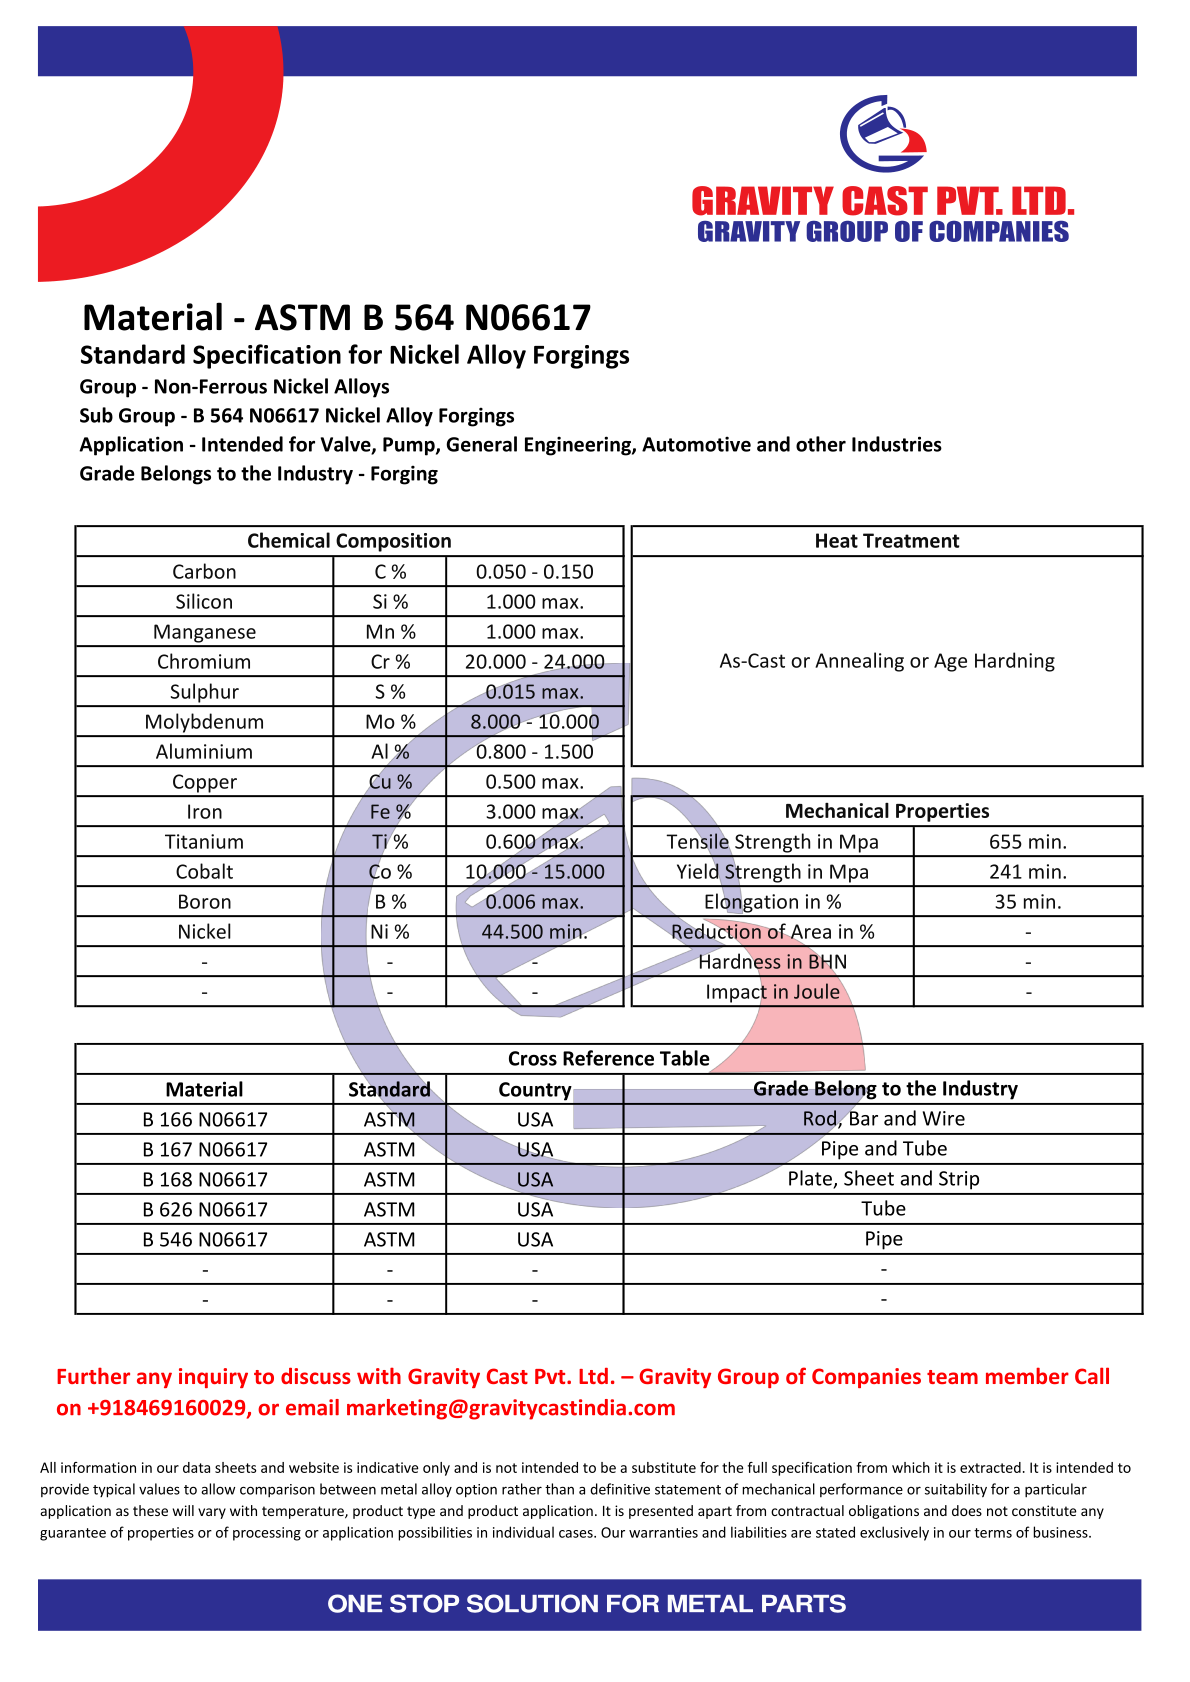 ASTM B 564 N06617.pdf